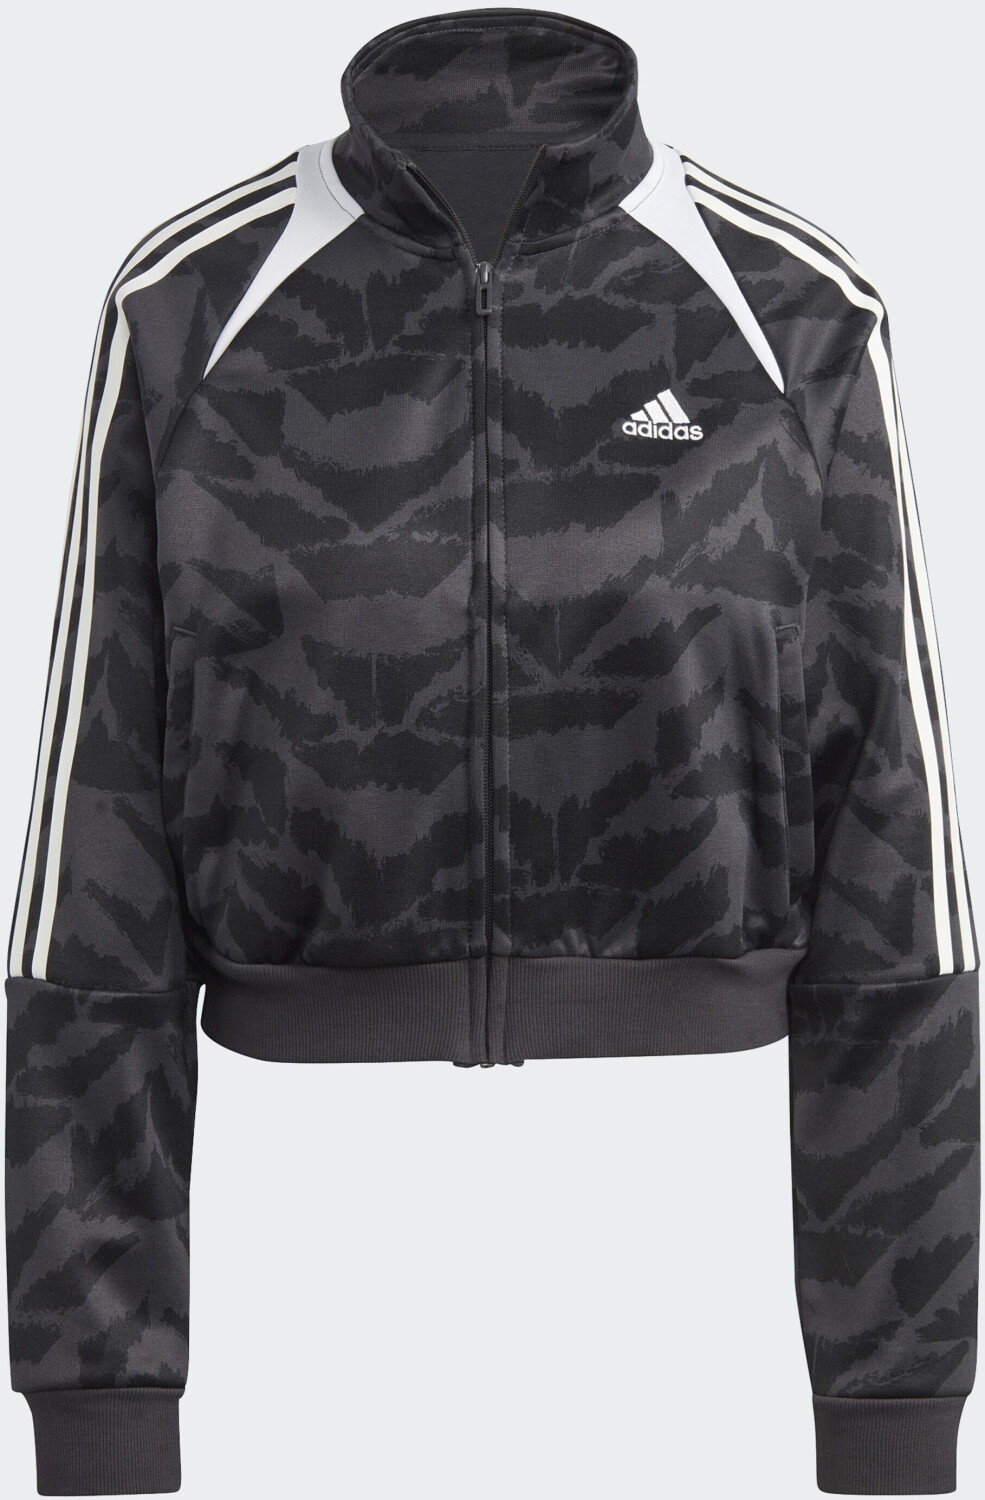 Adidas Tiro Suit Up Lifestyle Preisvergleich Trainingsjacke | bei € carbon/black/white/white 45,99 ab